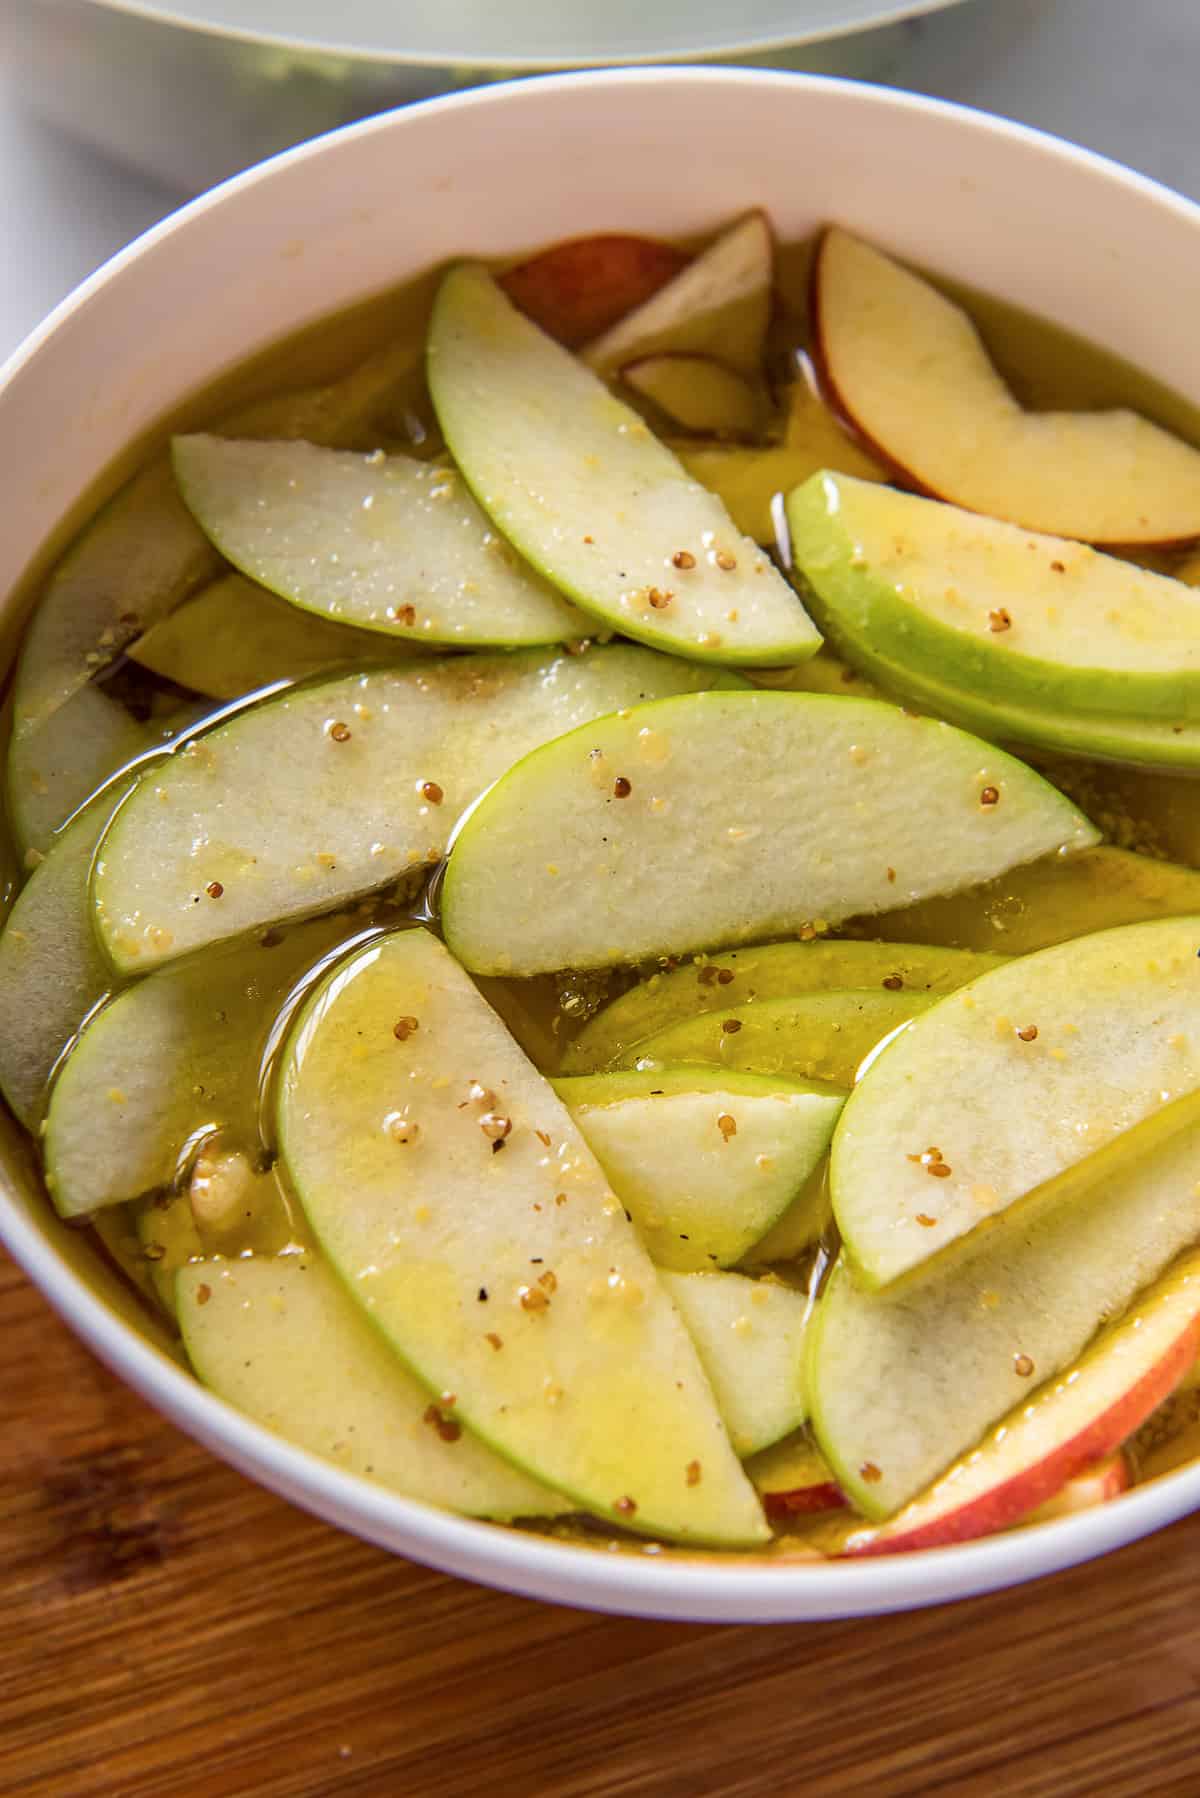 Apples soaking in a vinegar salad dressing in bowl.